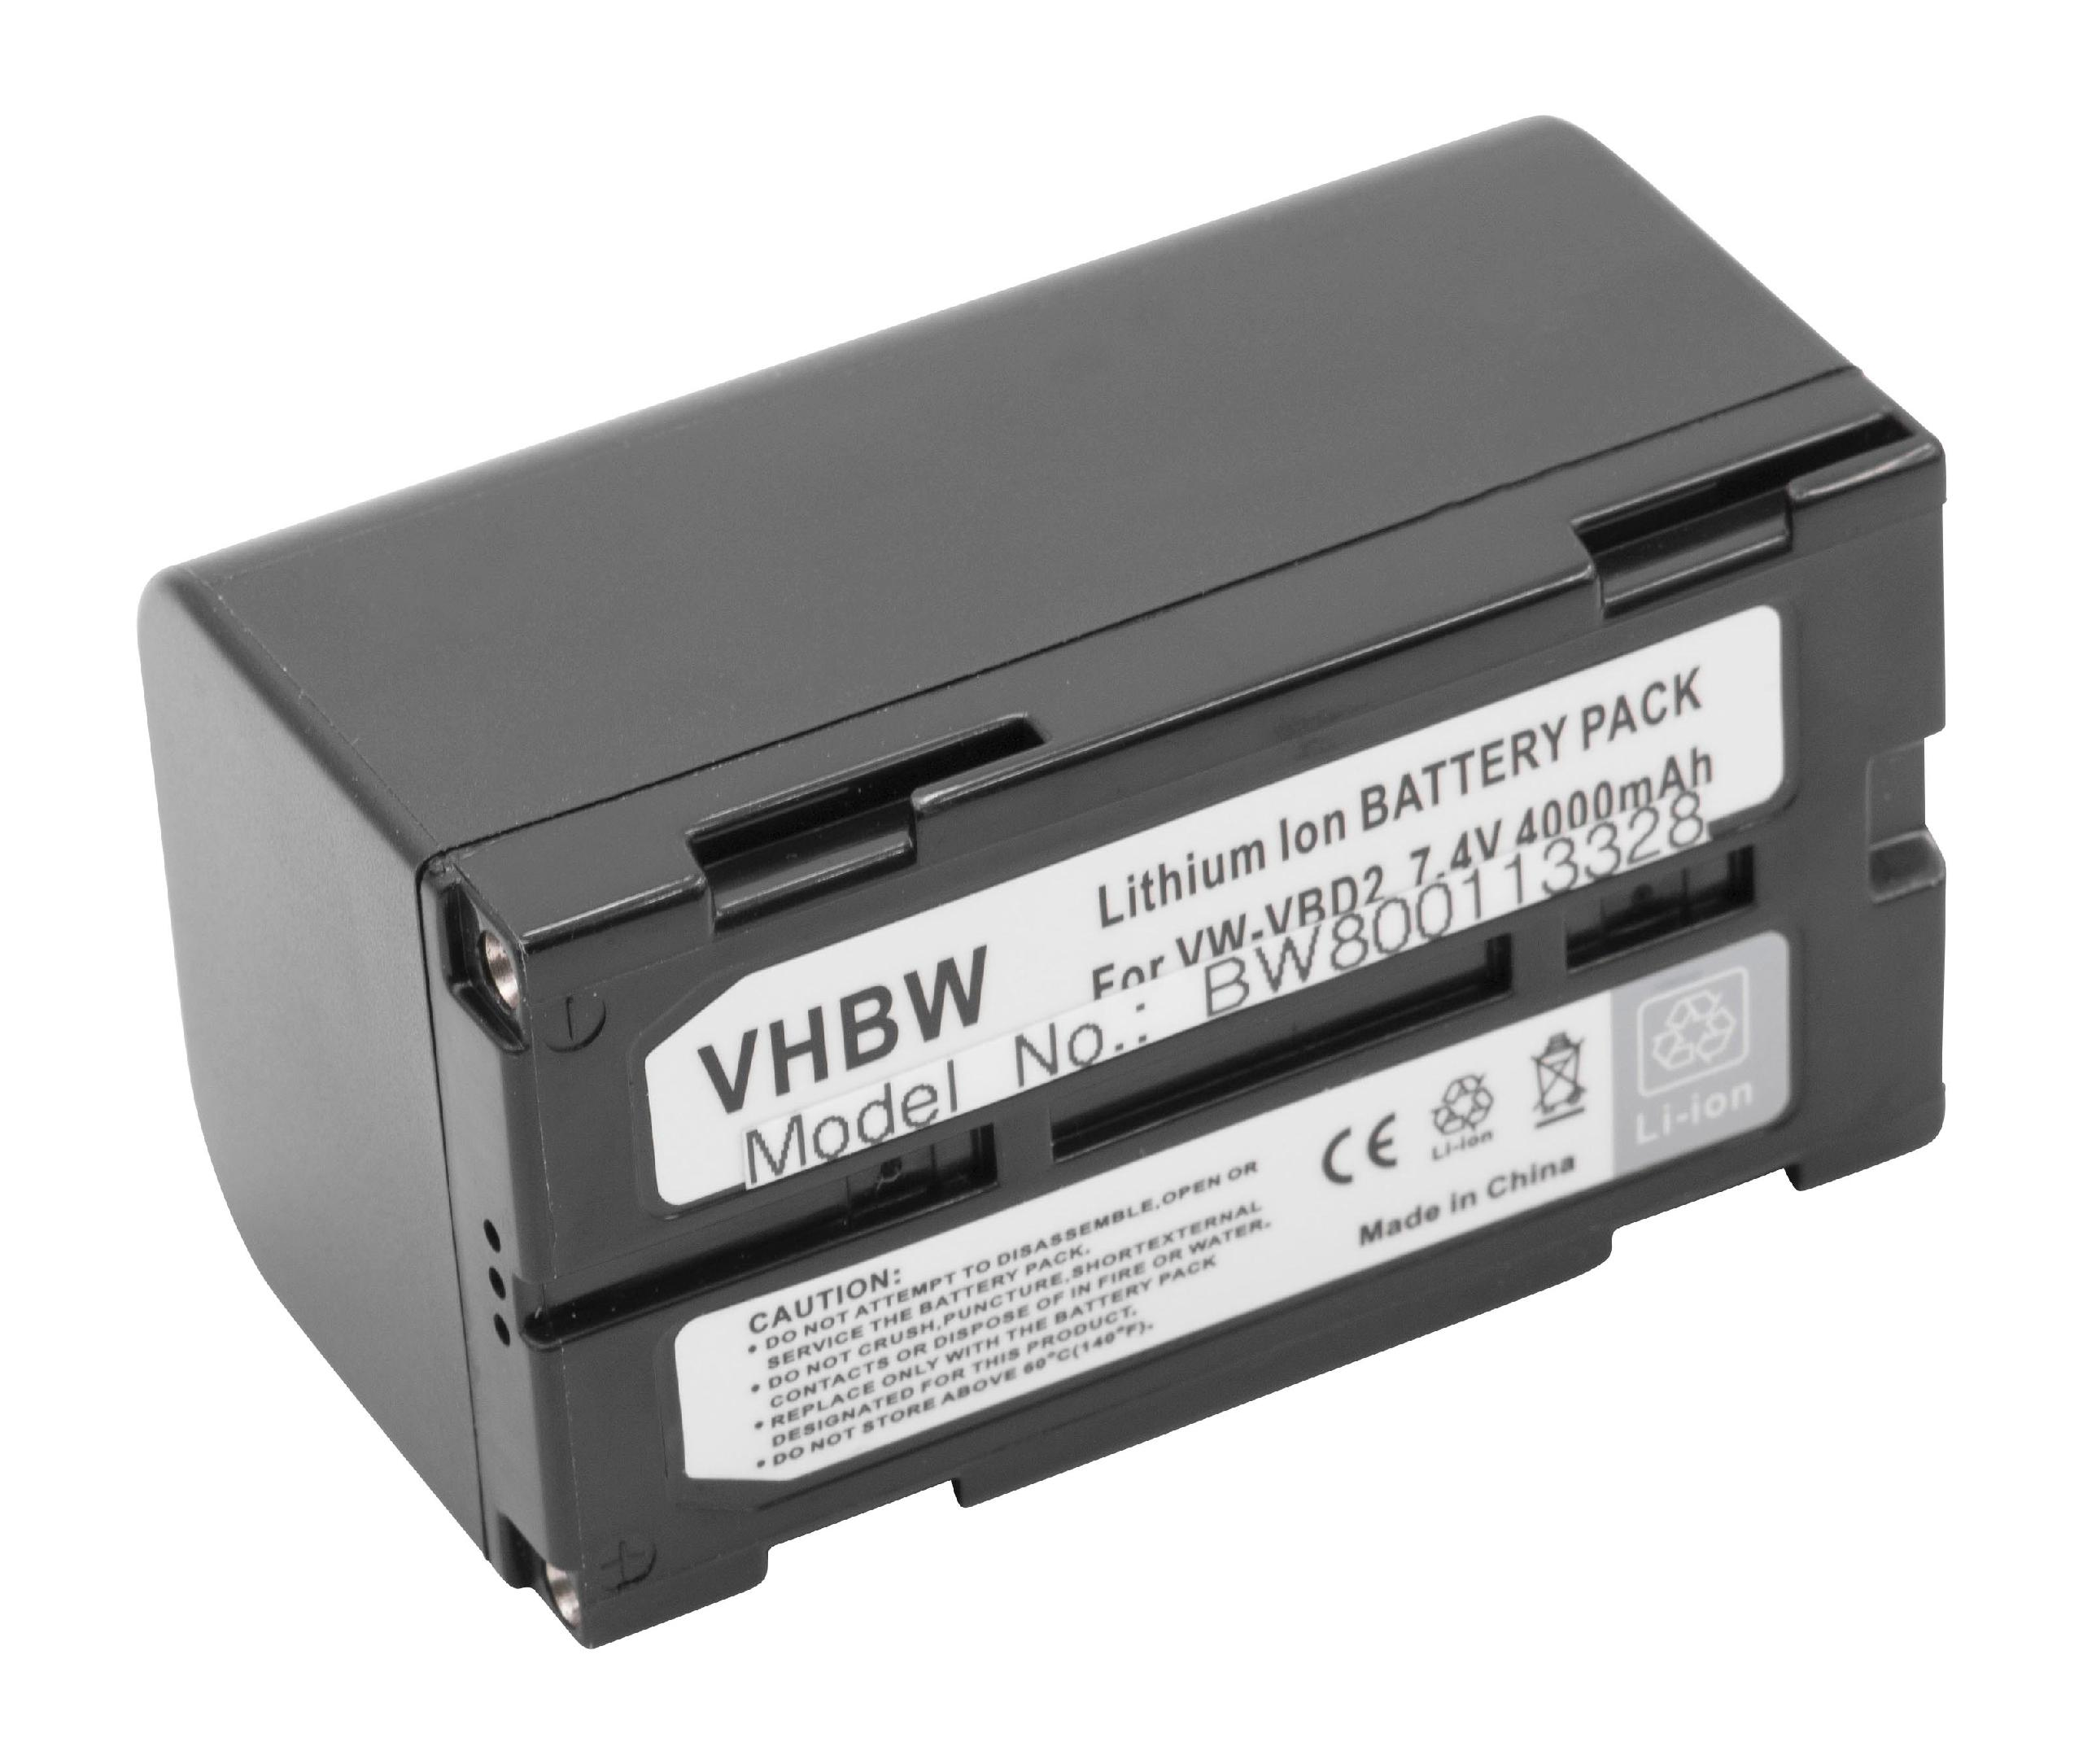 7.4 4000 VM-E635LA, Akku Li-Ion Hitachi Videokamera, - VM-E575LE, VM-E755LA, mit VHBW VM-E568LE, kompatibel VM-E645LA VM-E573LA, Volt,